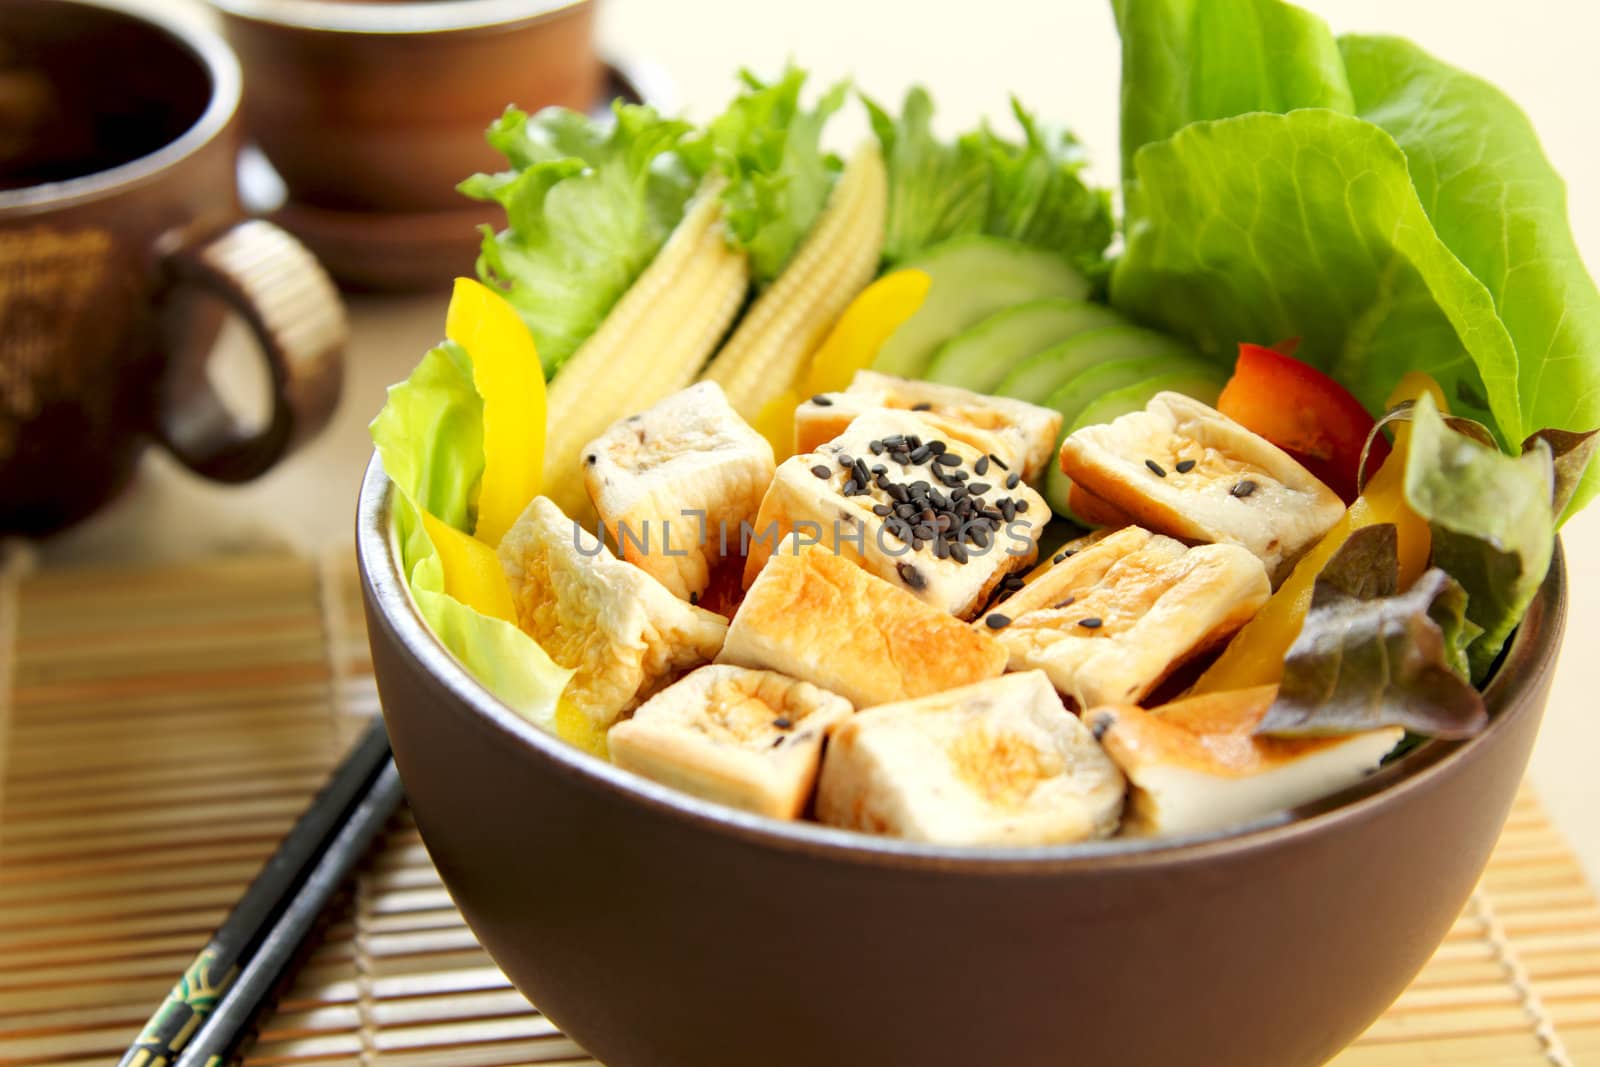 Tofu salad by vanillaechoes